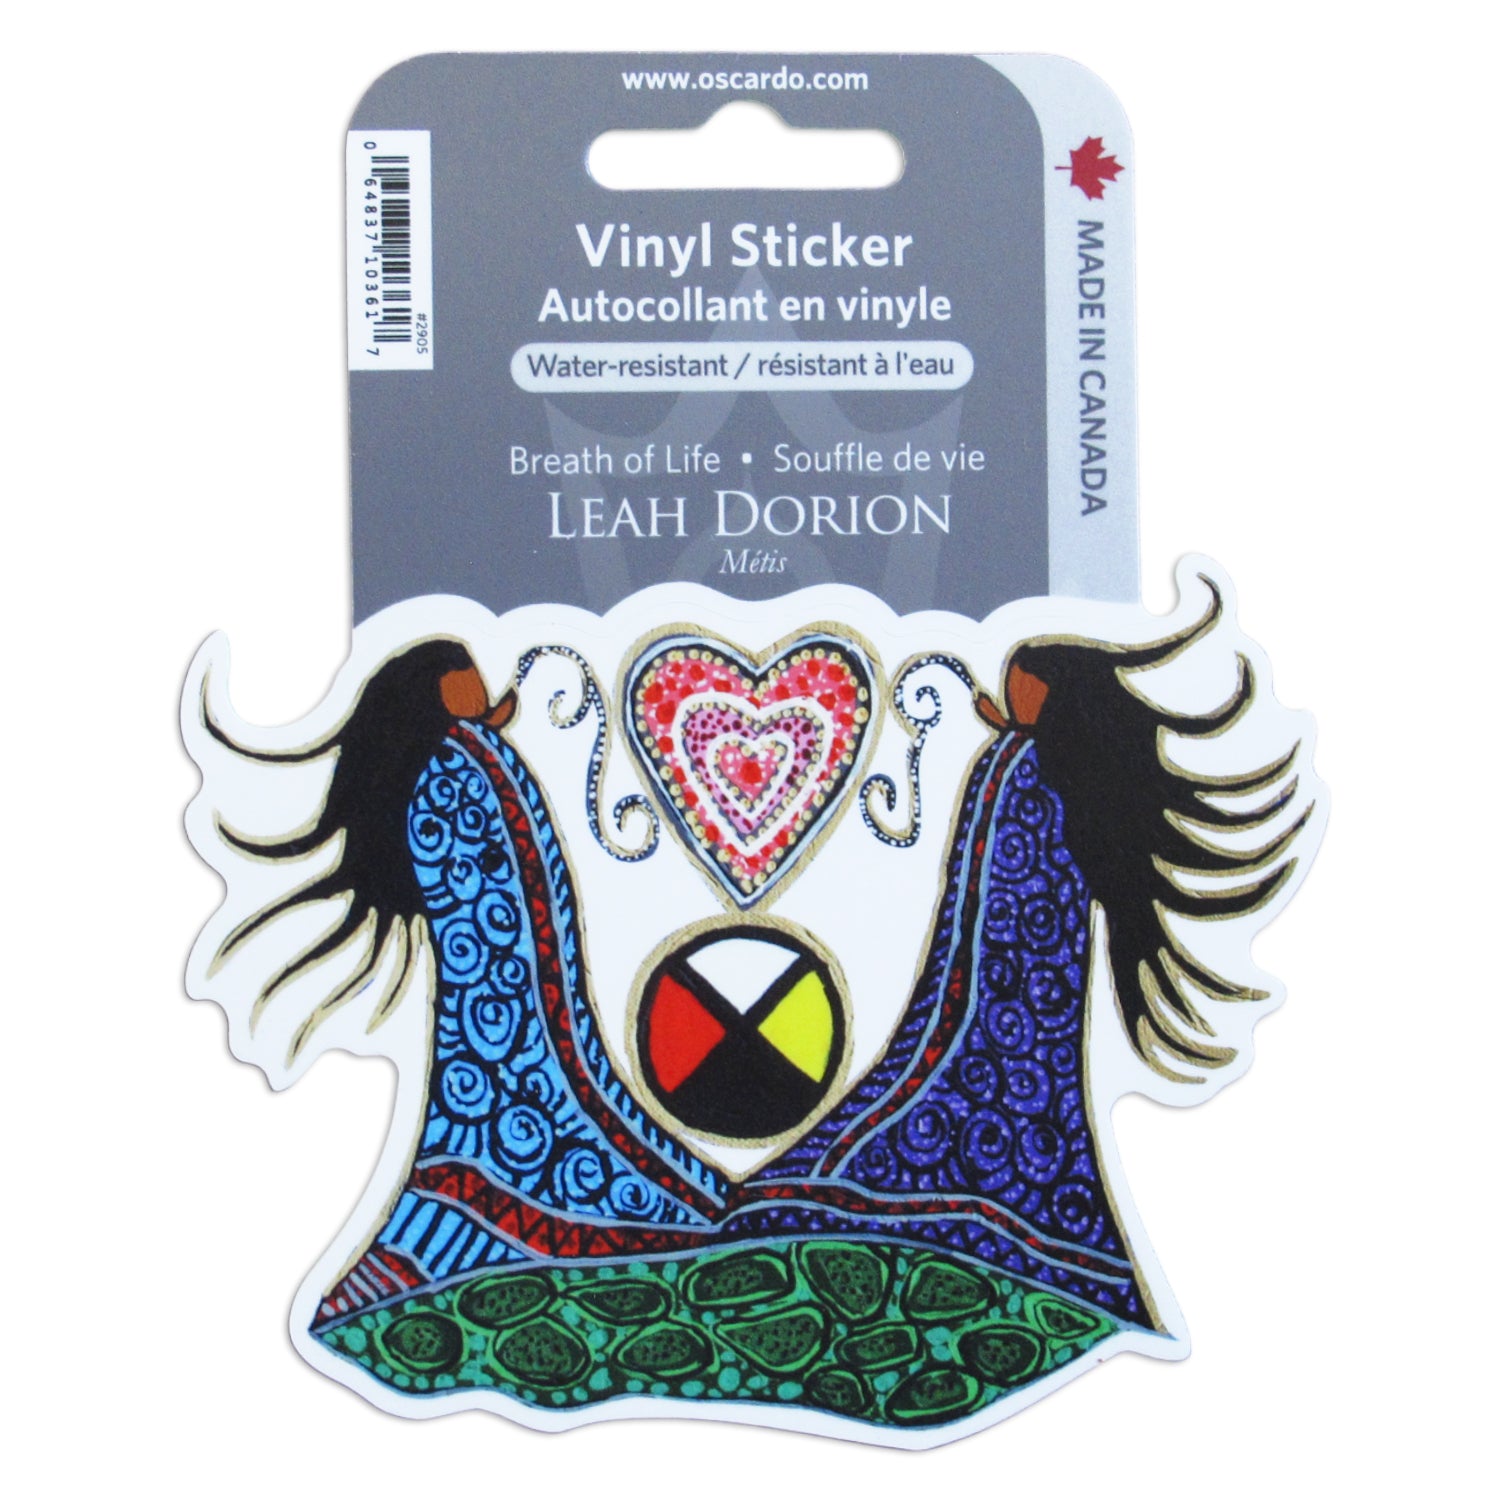 Leah Dorion Breath of Life Vinyl Sticker